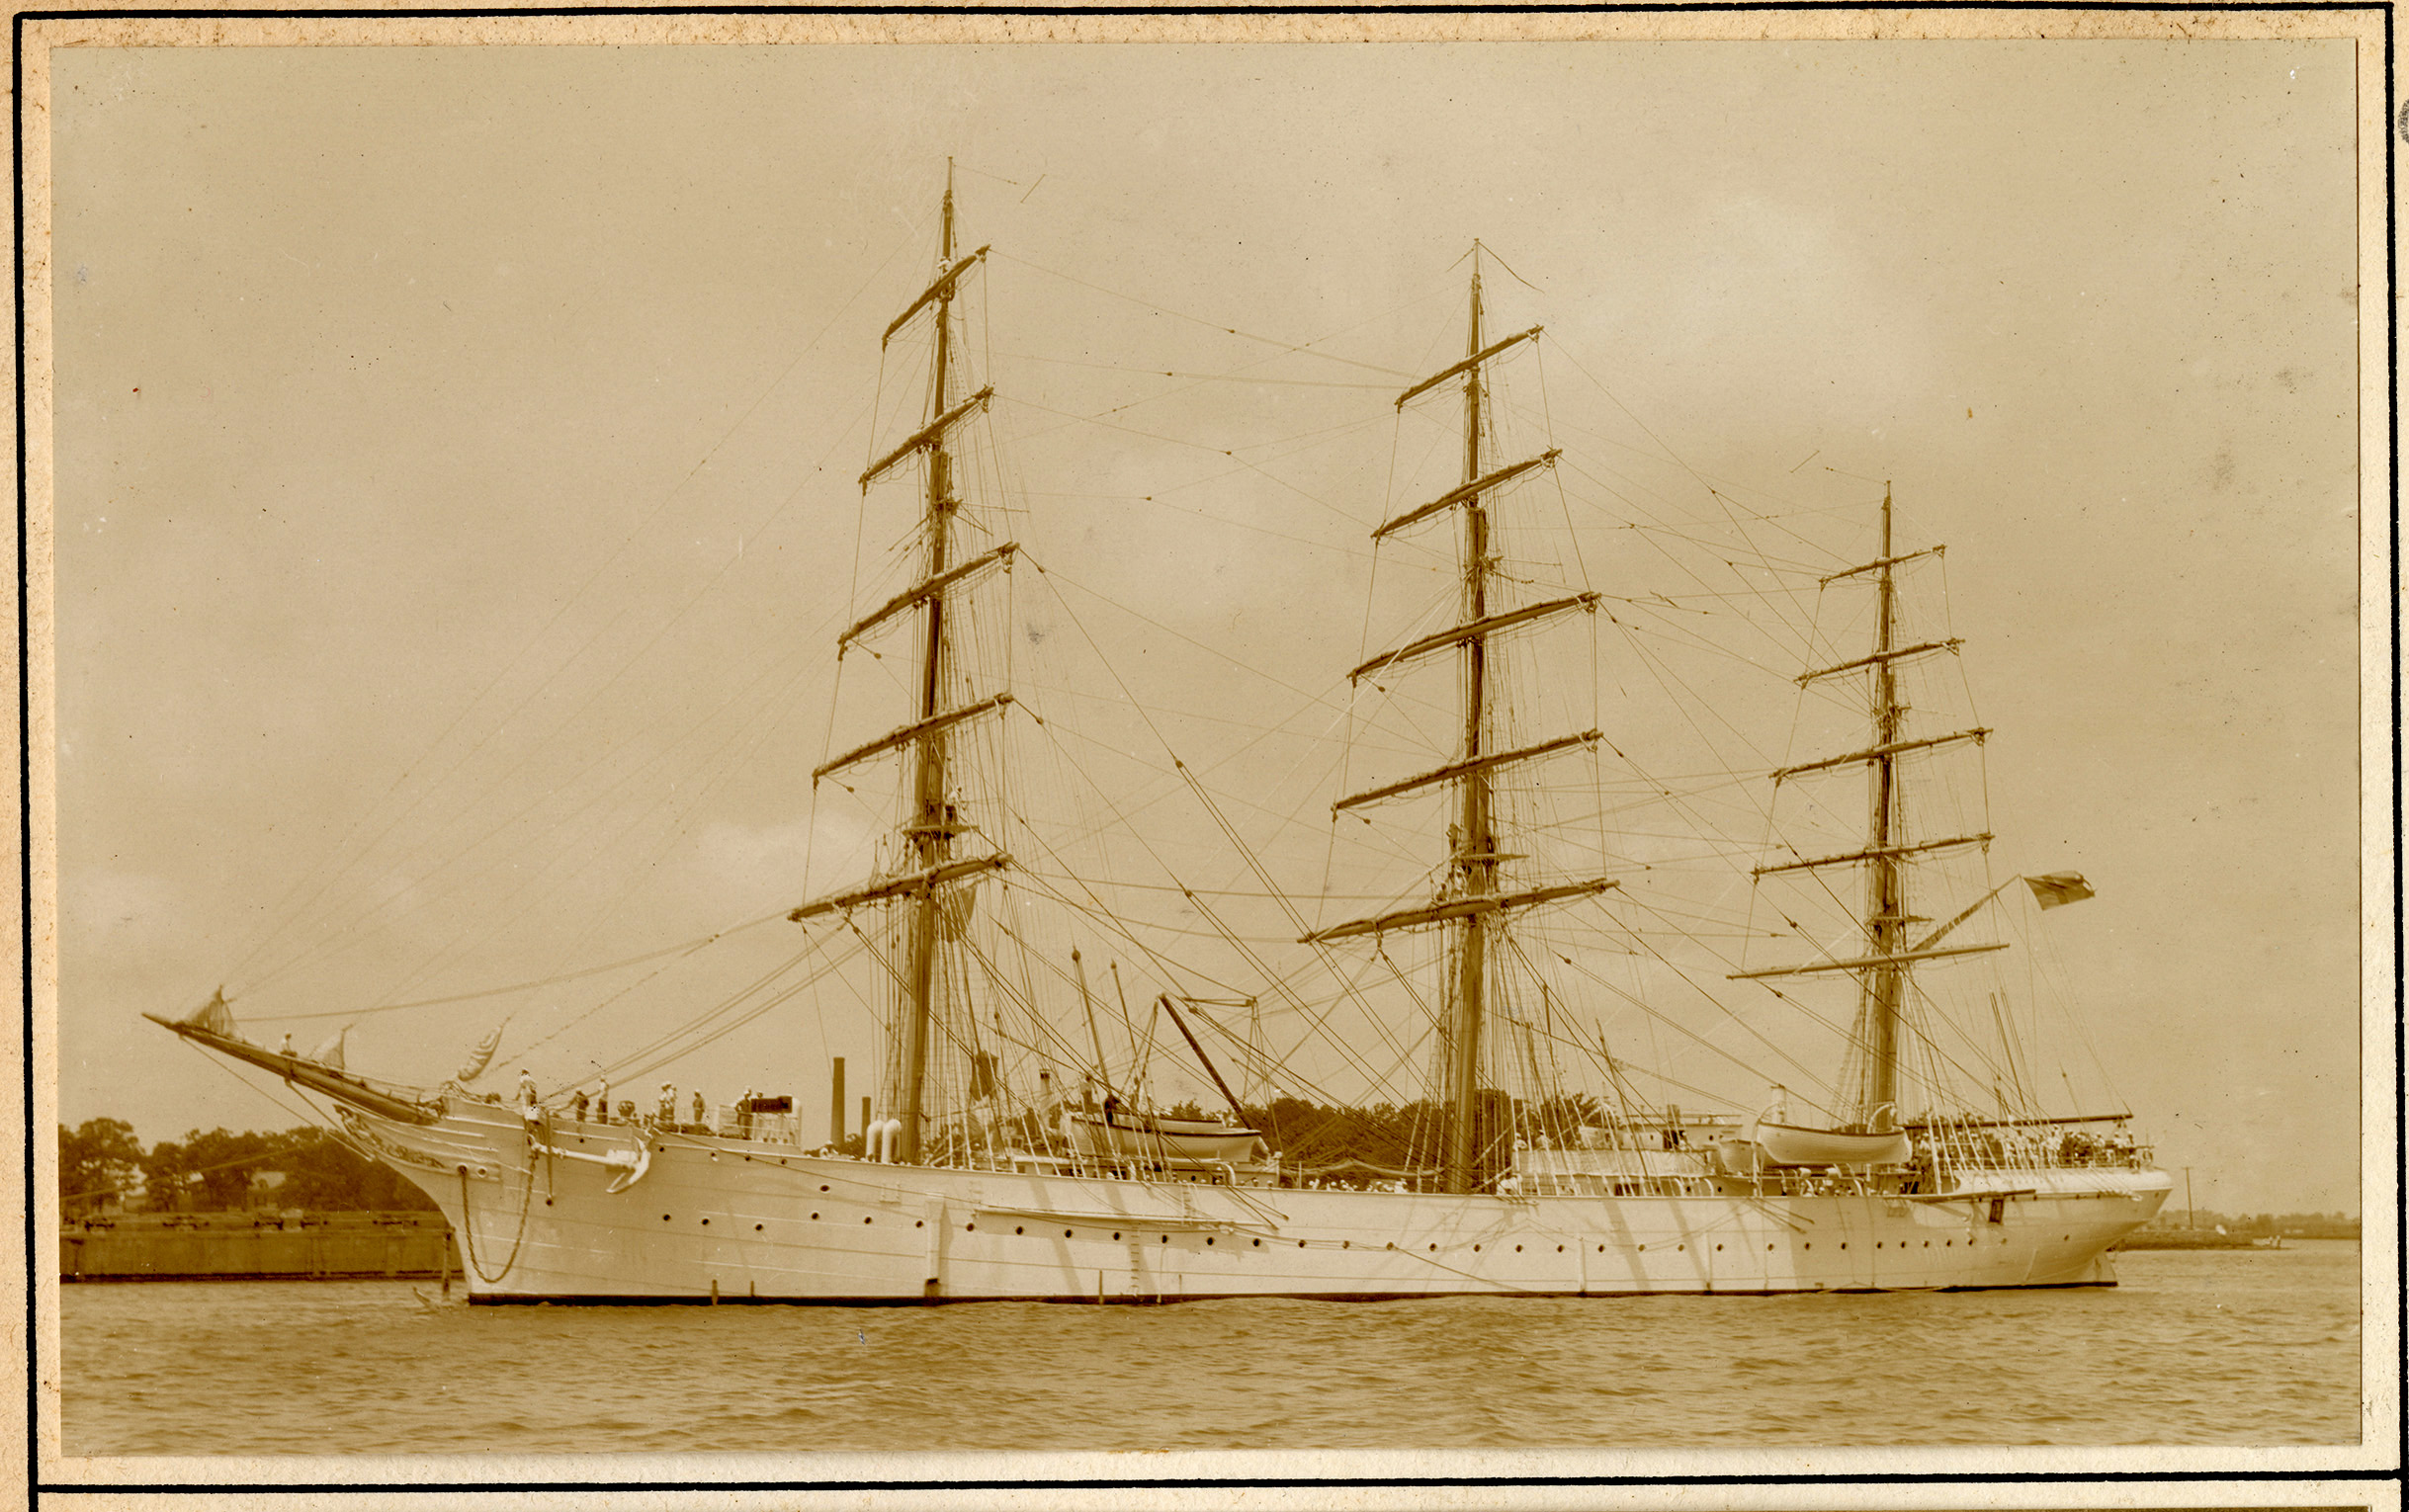 Three-masted sailing ship alongside a quay